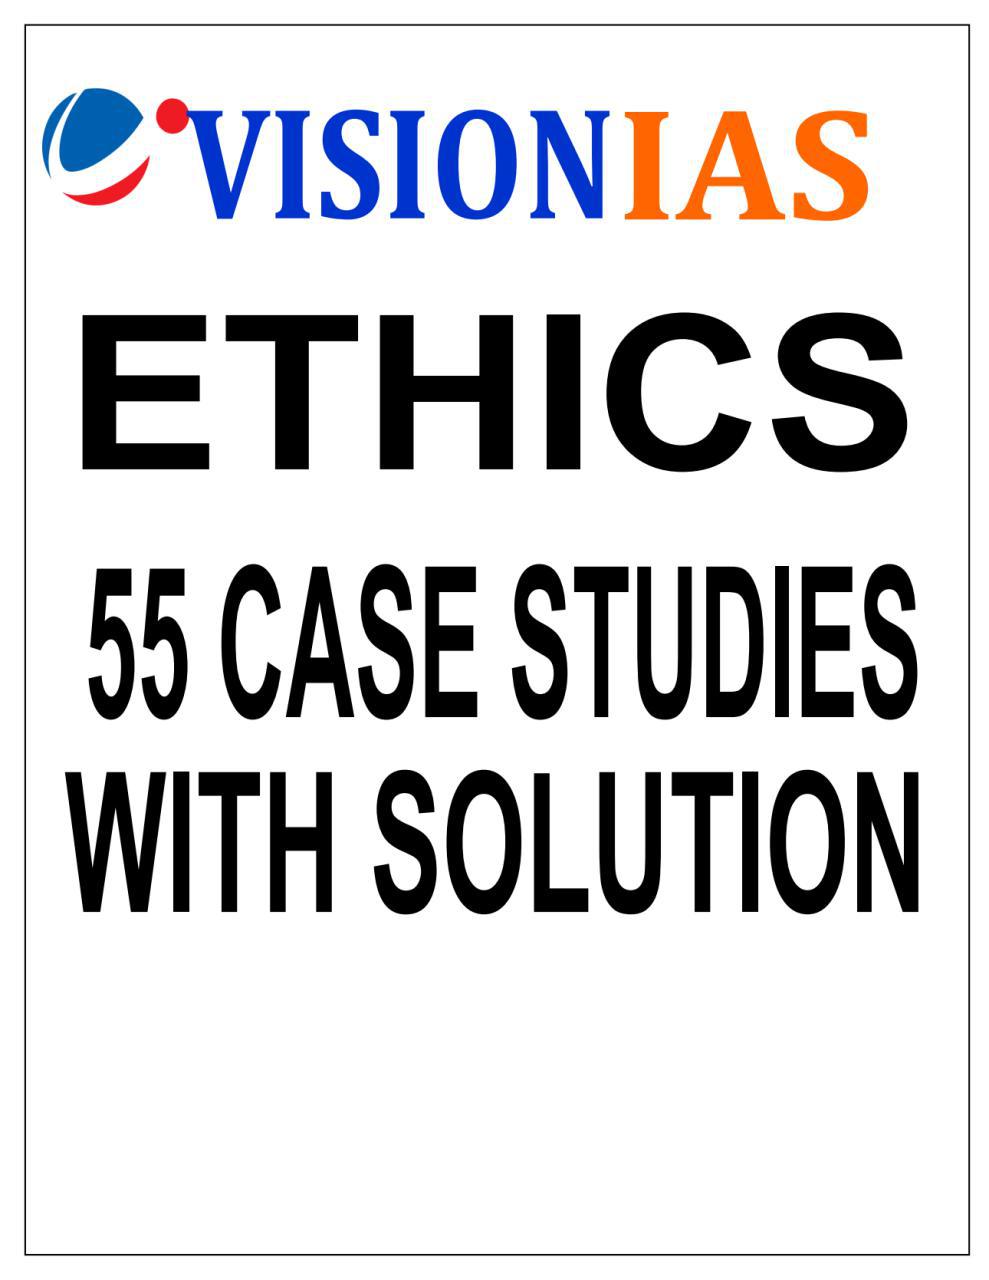 ethics case study vision ias pdf